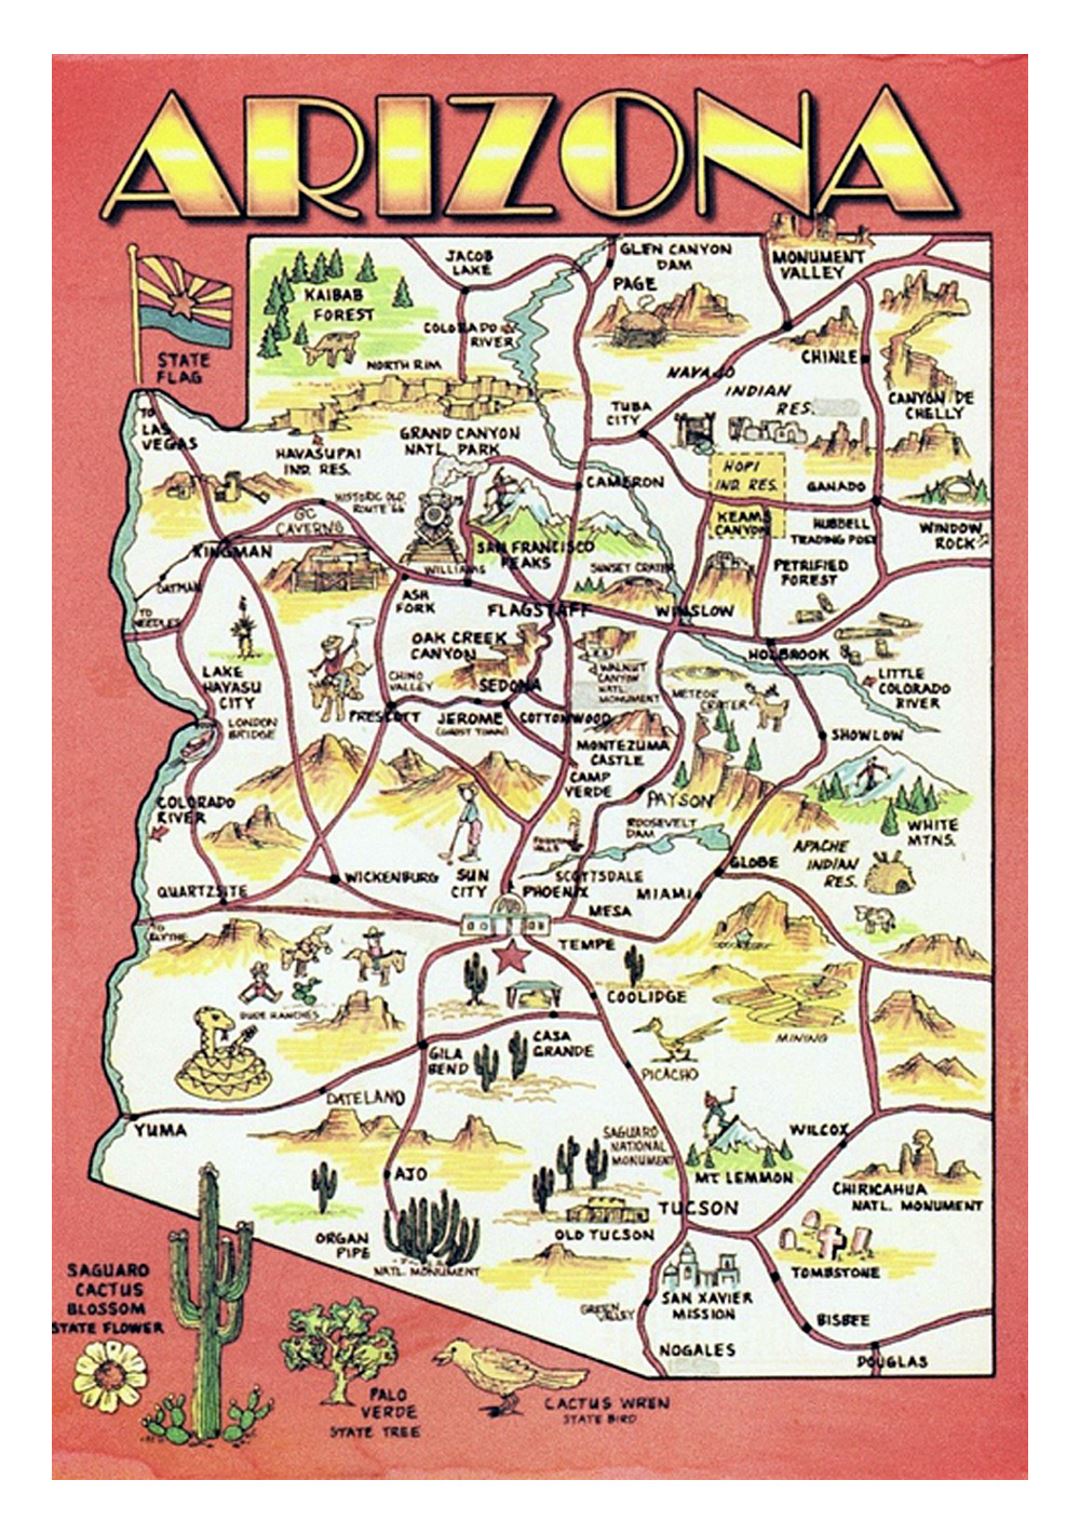 Detailed travel illustrated map of Arizona state